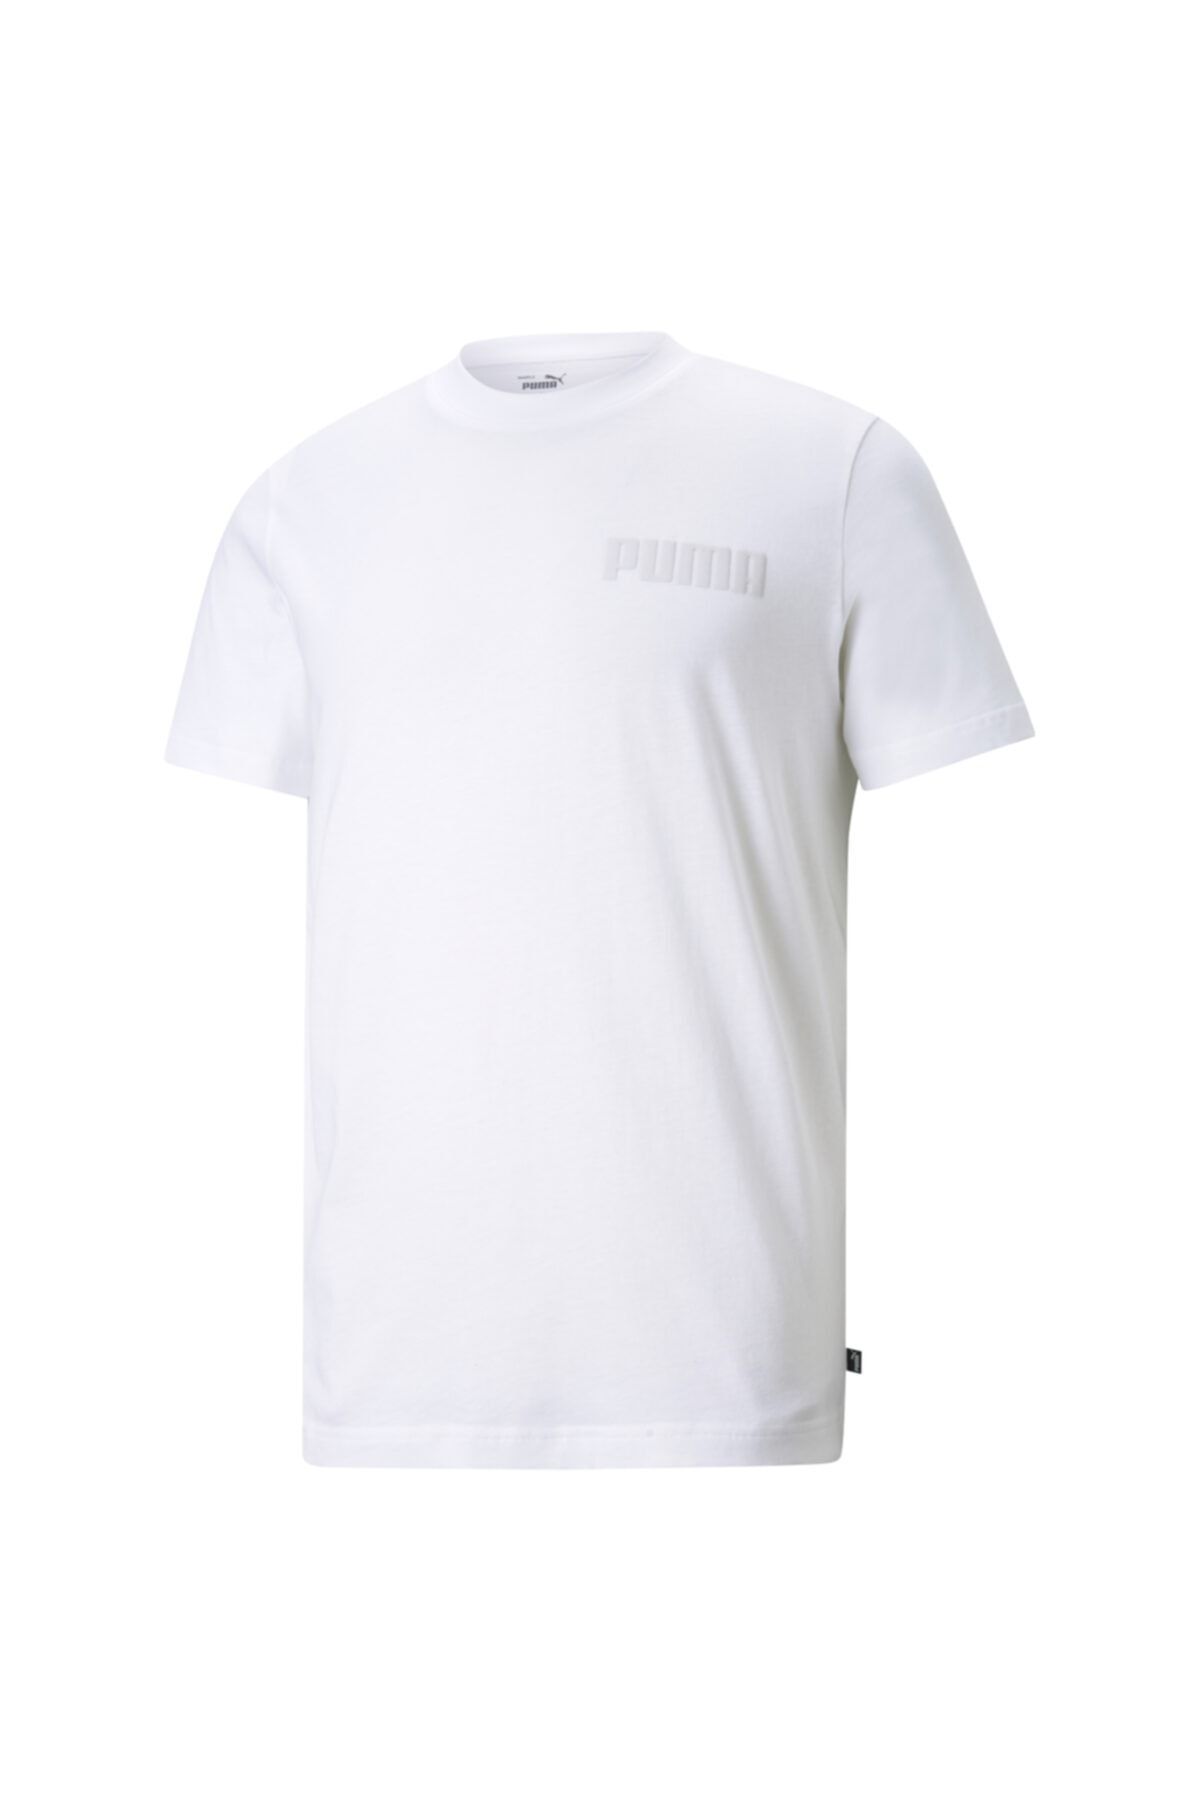 Puma MODERN BASICS TEE Beyaz Erkek T-Shirt 101085565